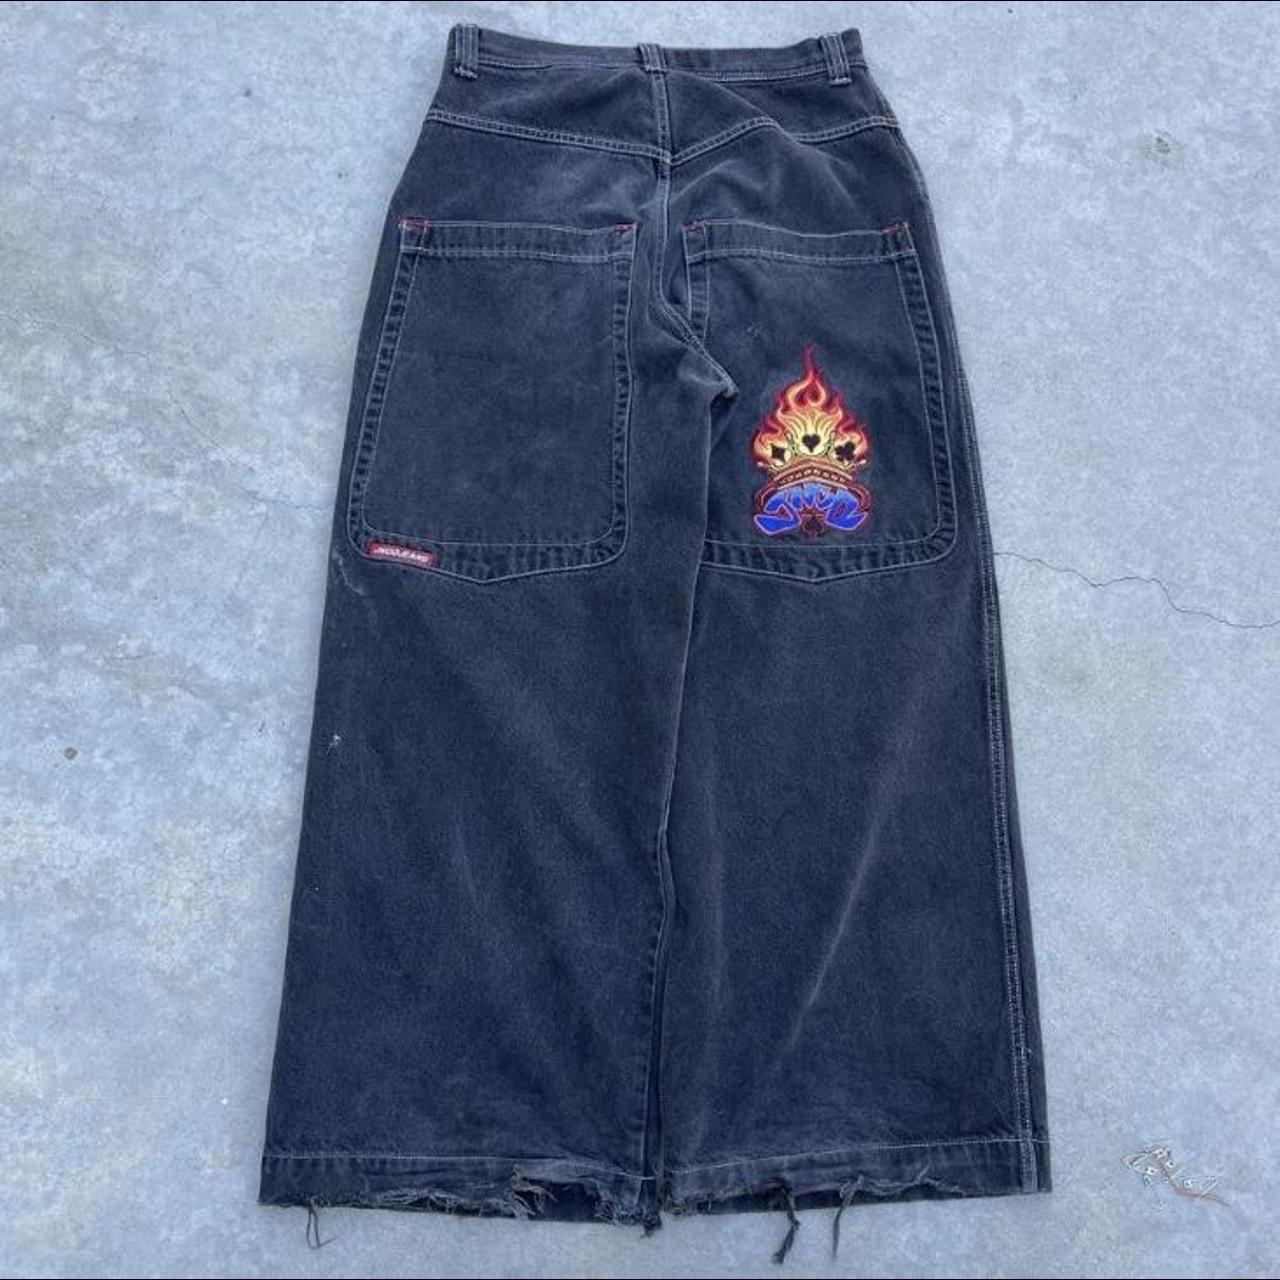 Vintage JNCO Jeans Black, Rare Flaming Spade 26